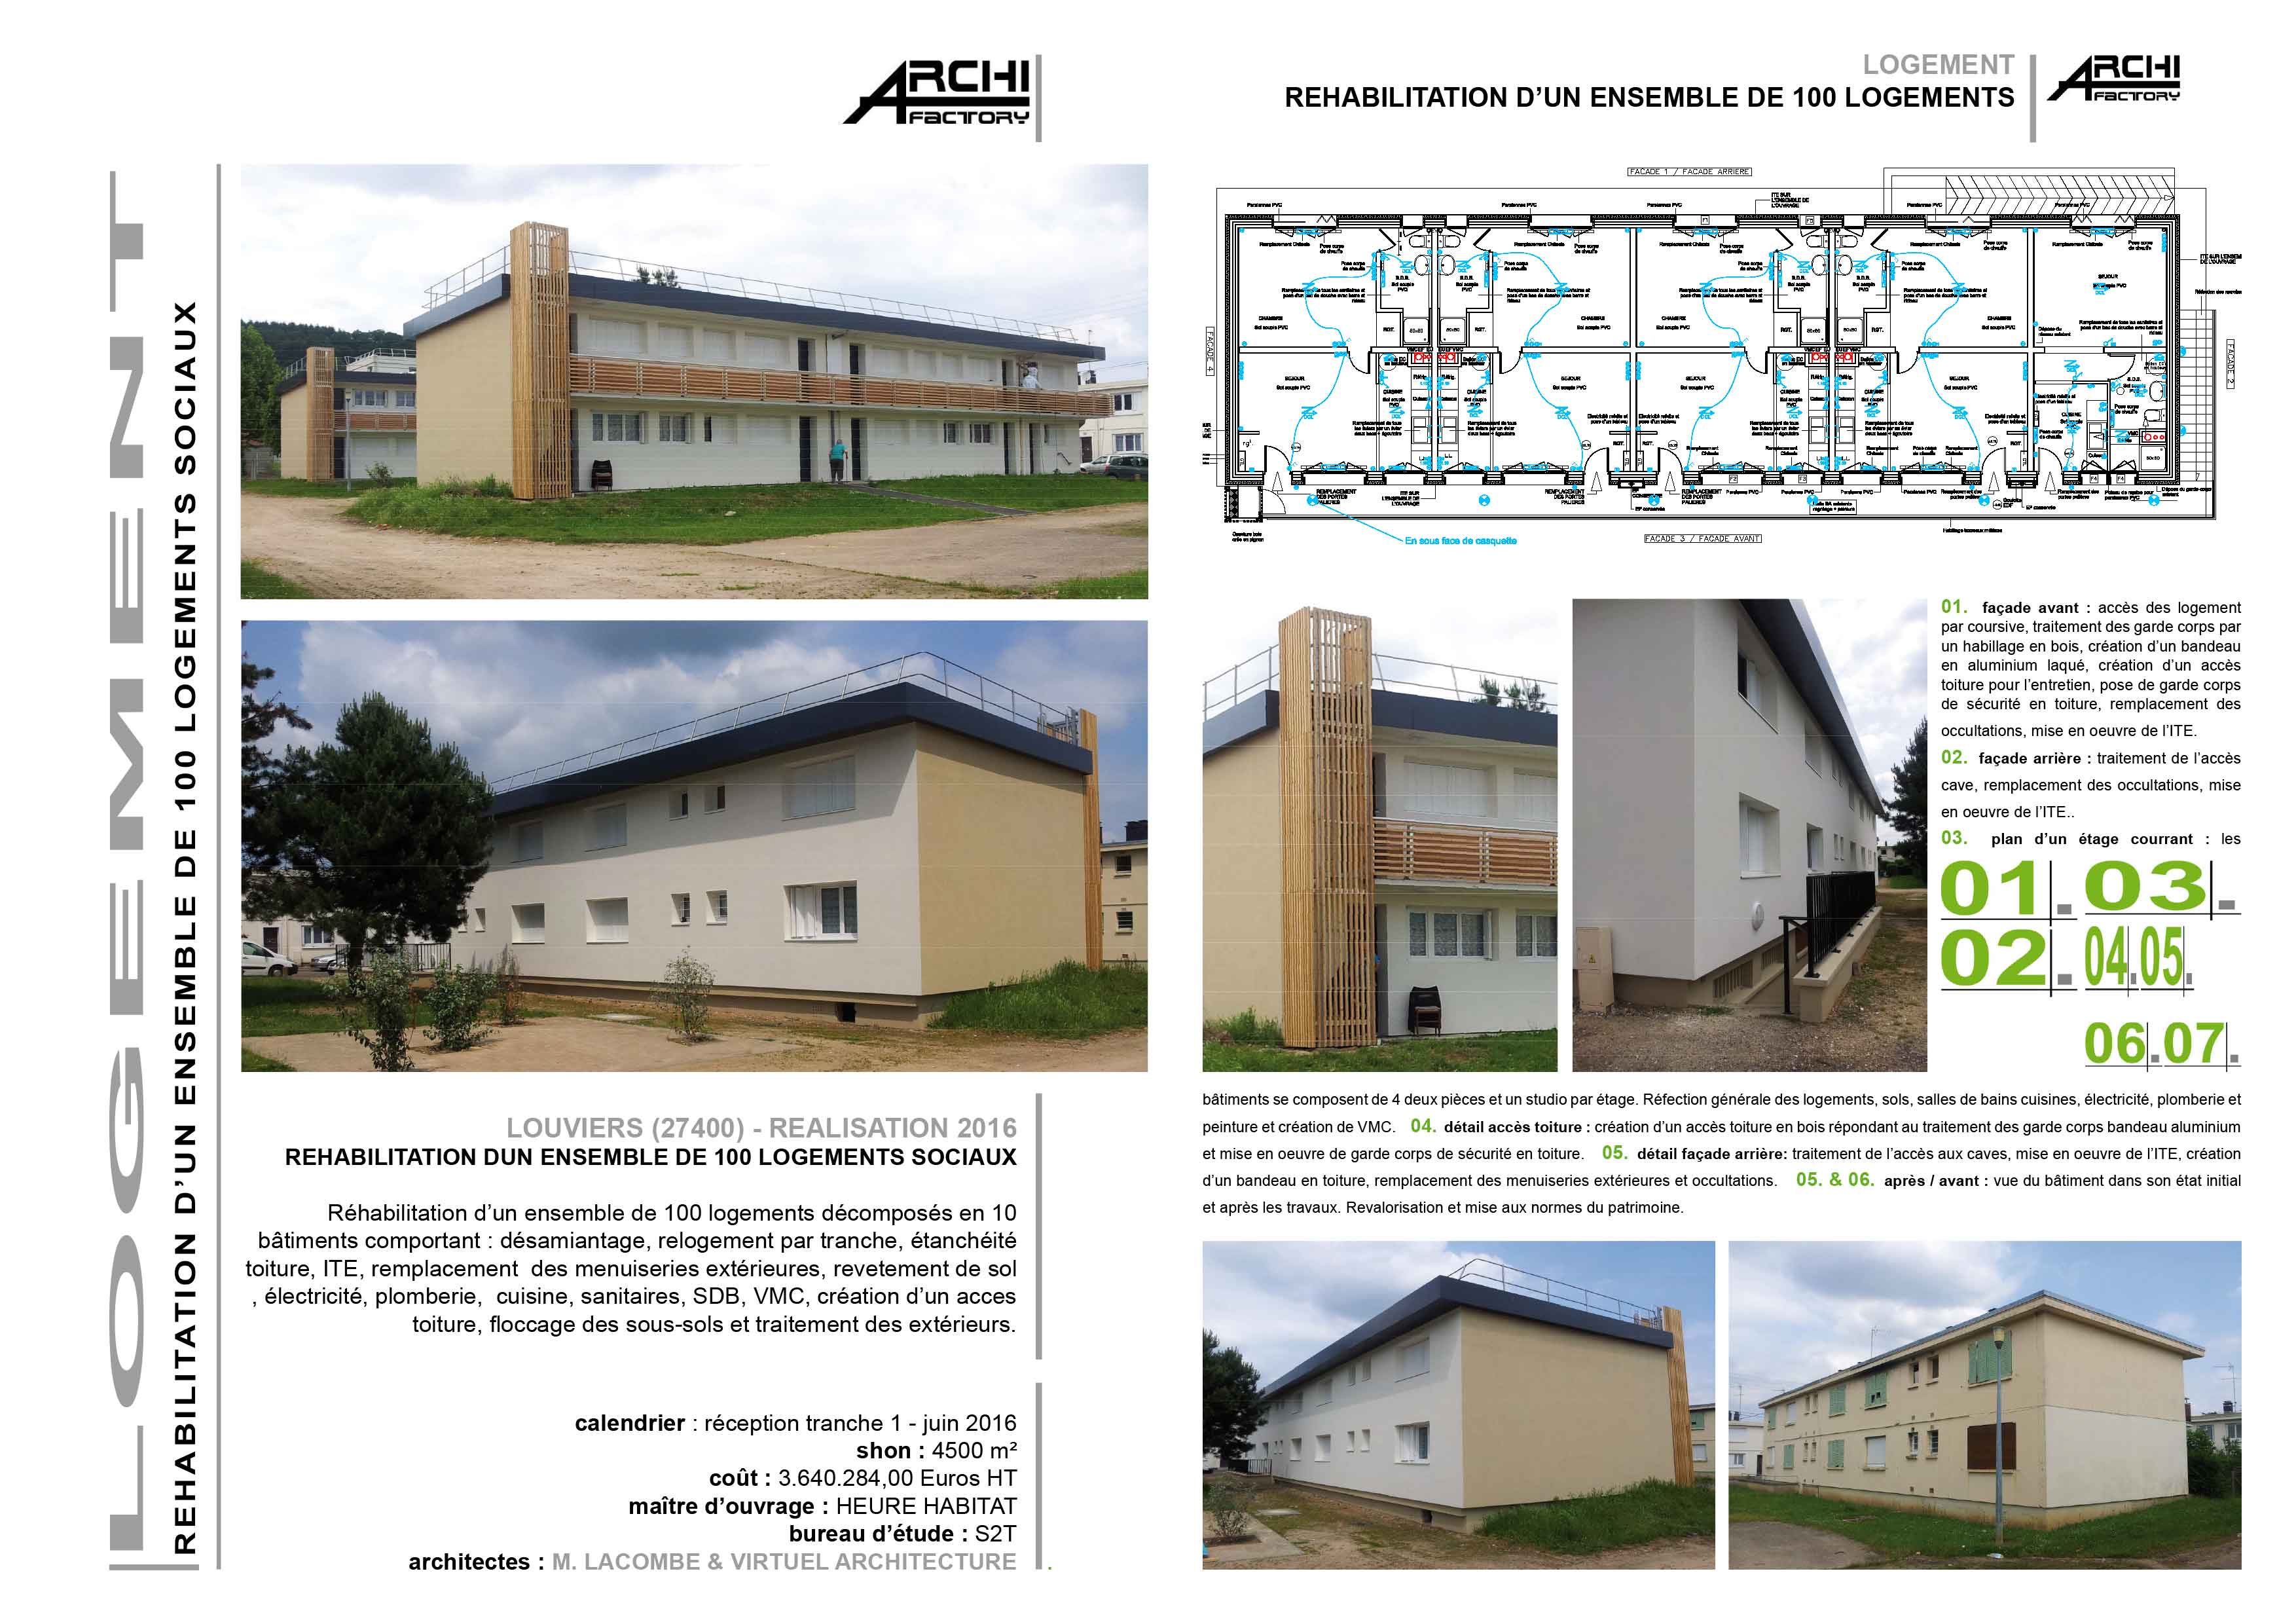 archifactory architectes - marc lacombe - projet louvier